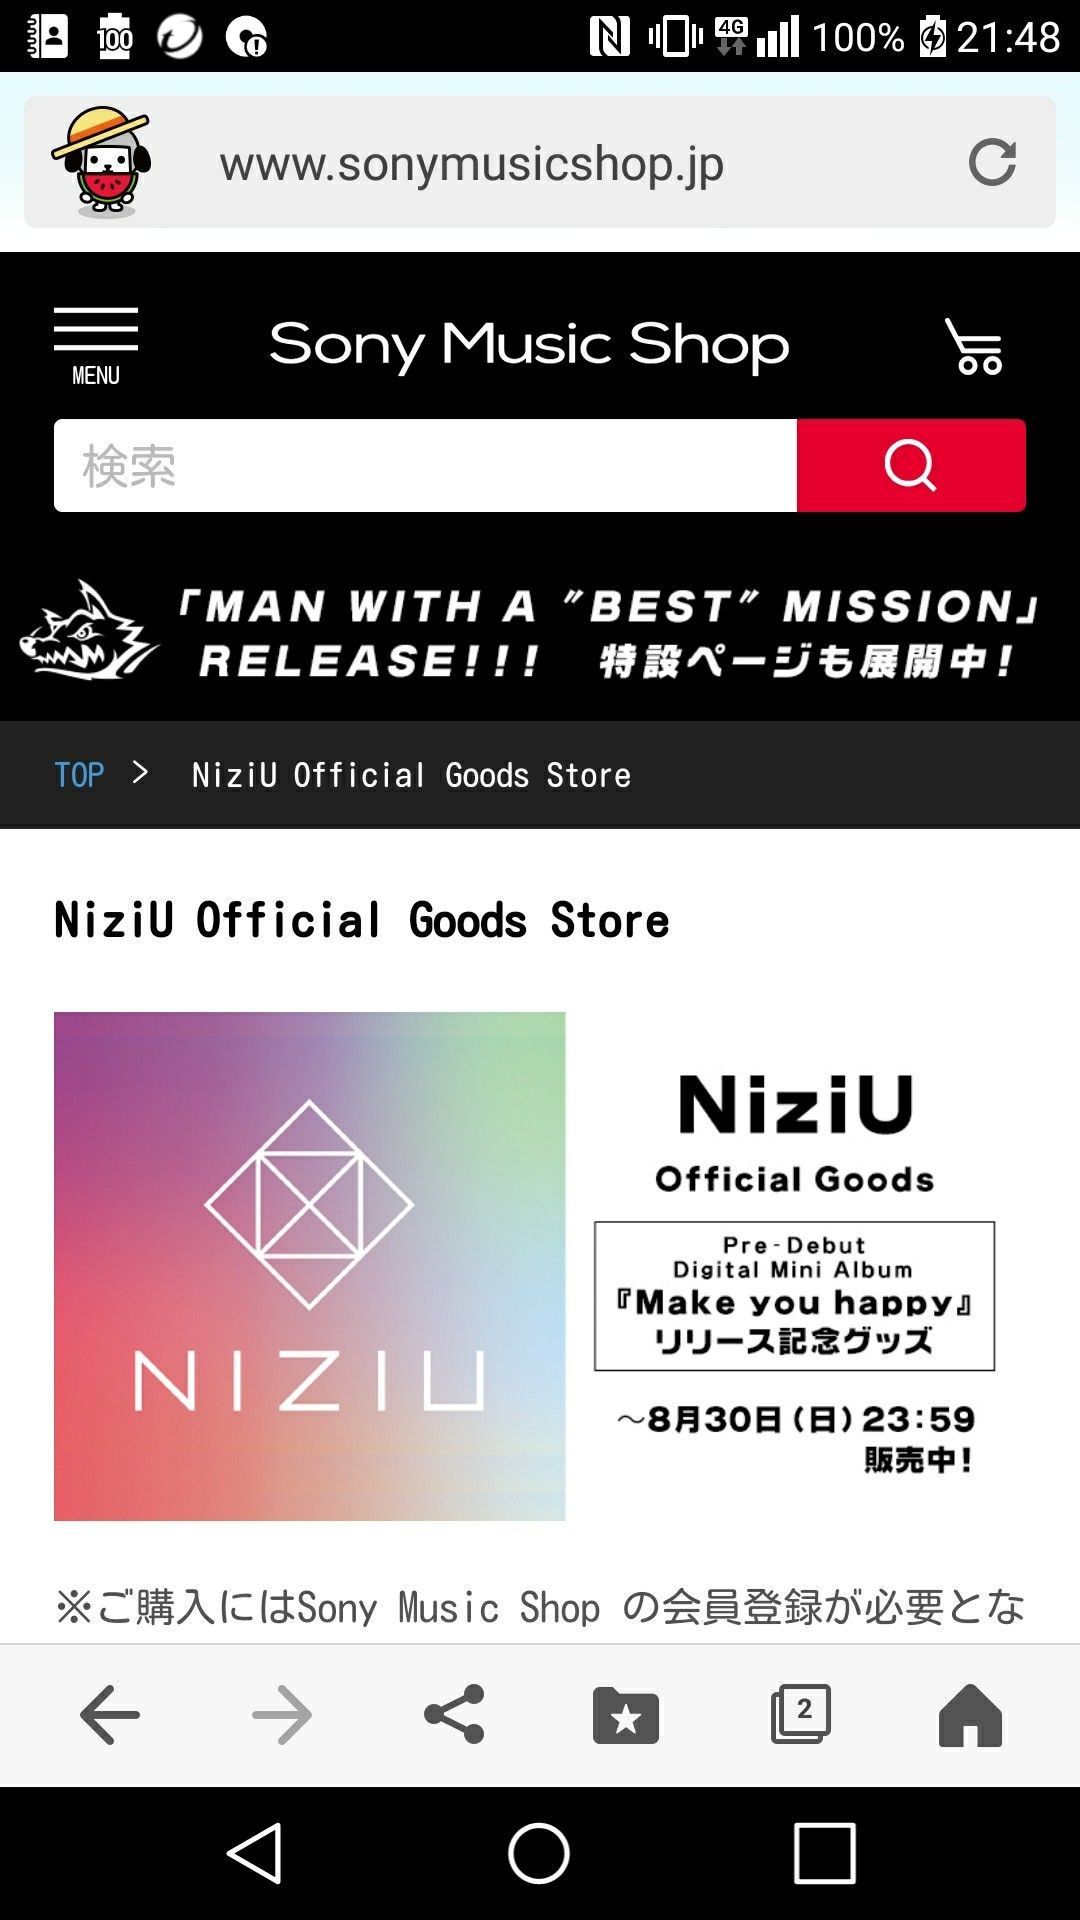 NiziUの公式グッズの予約がスタートしましたね。 | K-POP PLAZA HIROSHIMAの最新入荷情報などなど。 - 楽天ブログ